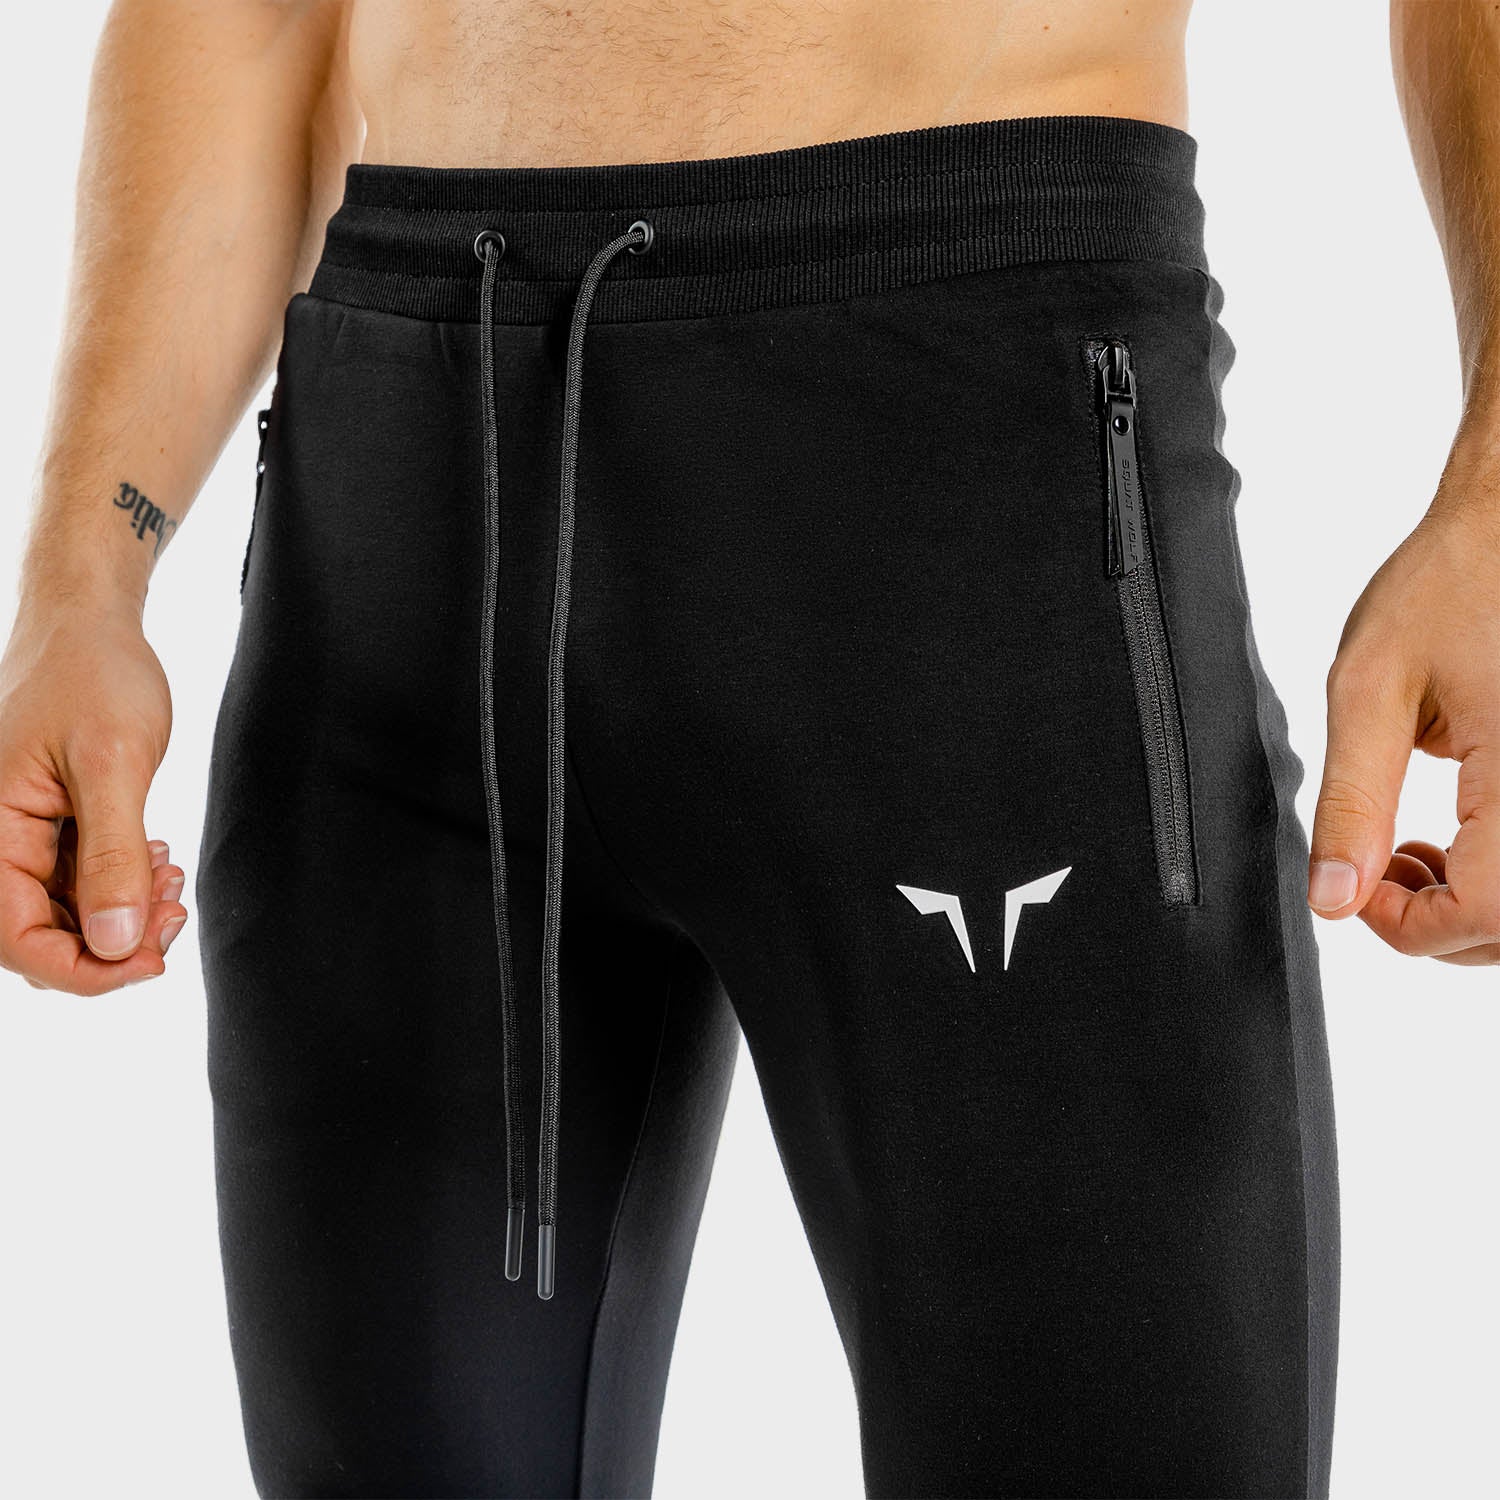 squatwolf-gym-wear-statement-classic-joggers-black-workout-pants-for-men